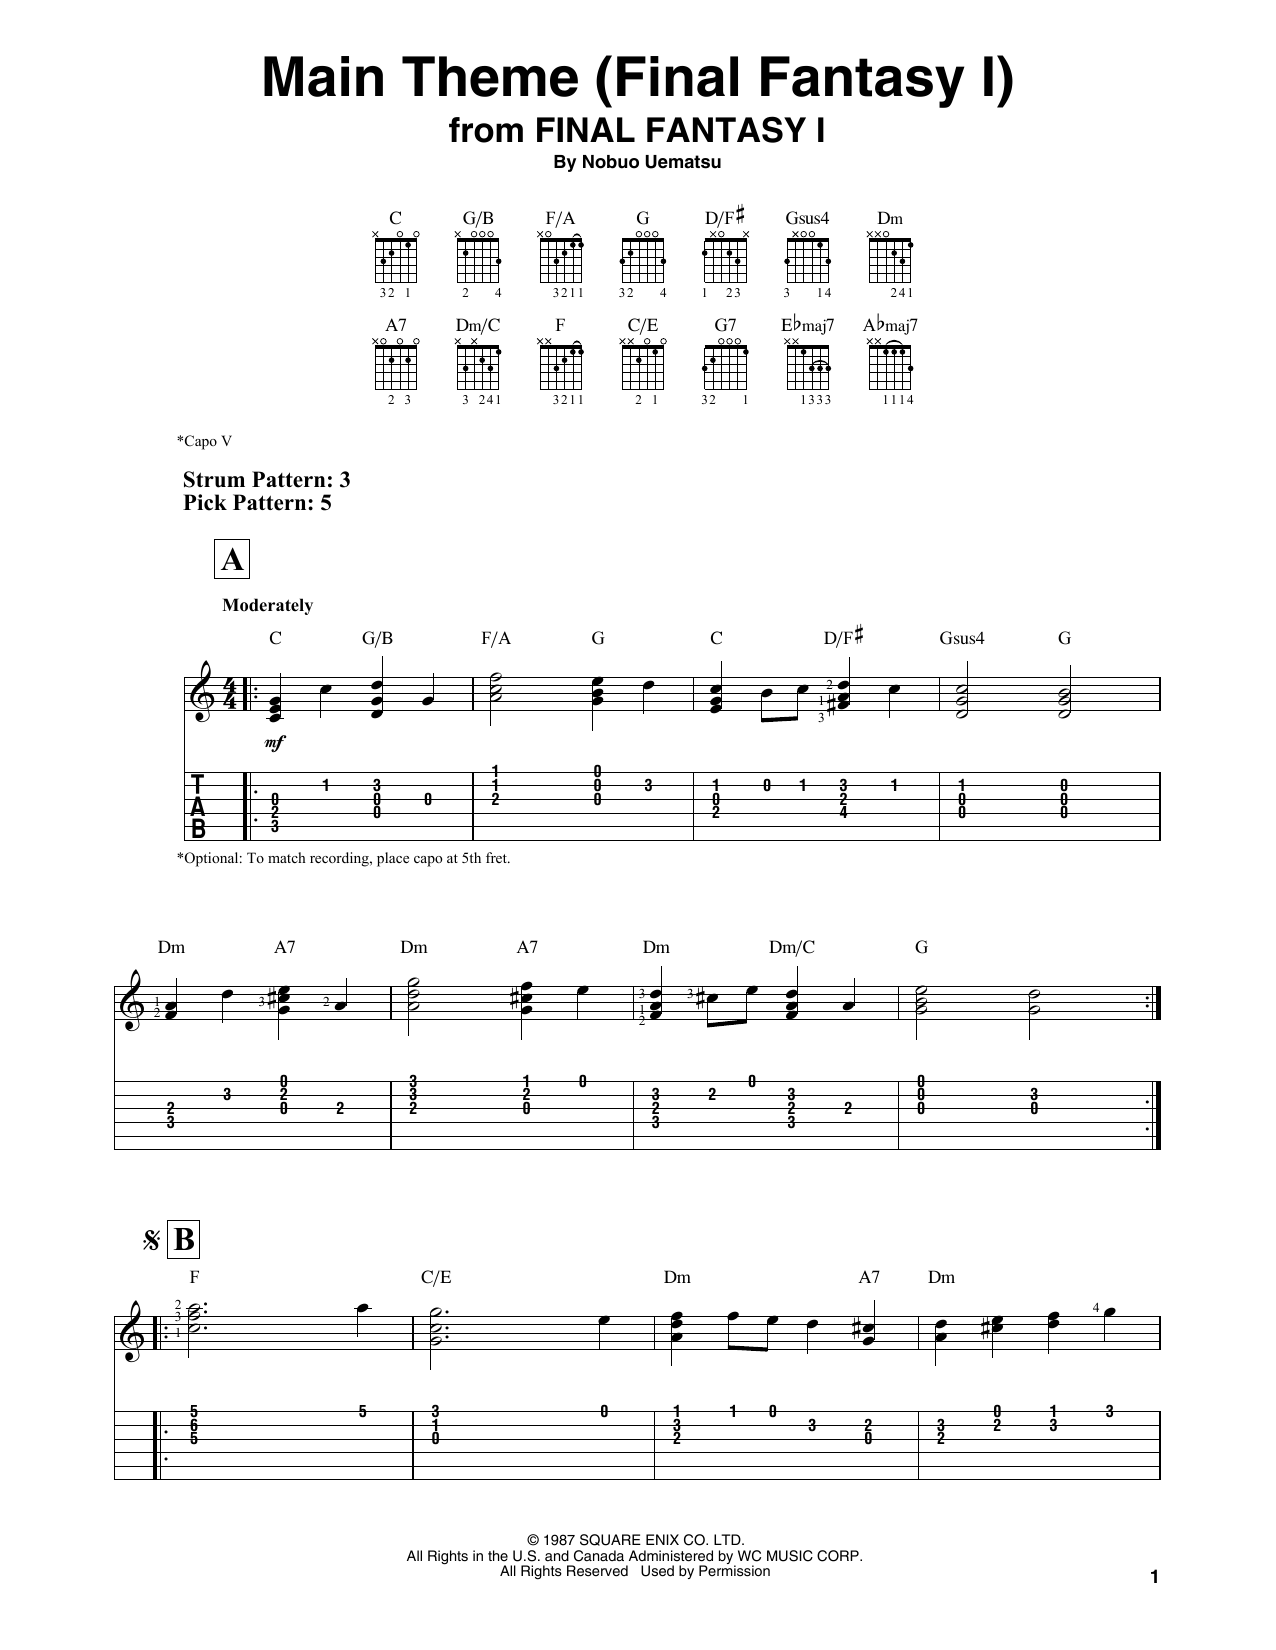 Nobuo Uematsu Main Theme (Final Fantasy I) Sheet Music Notes & Chords for Solo Guitar Tab - Download or Print PDF